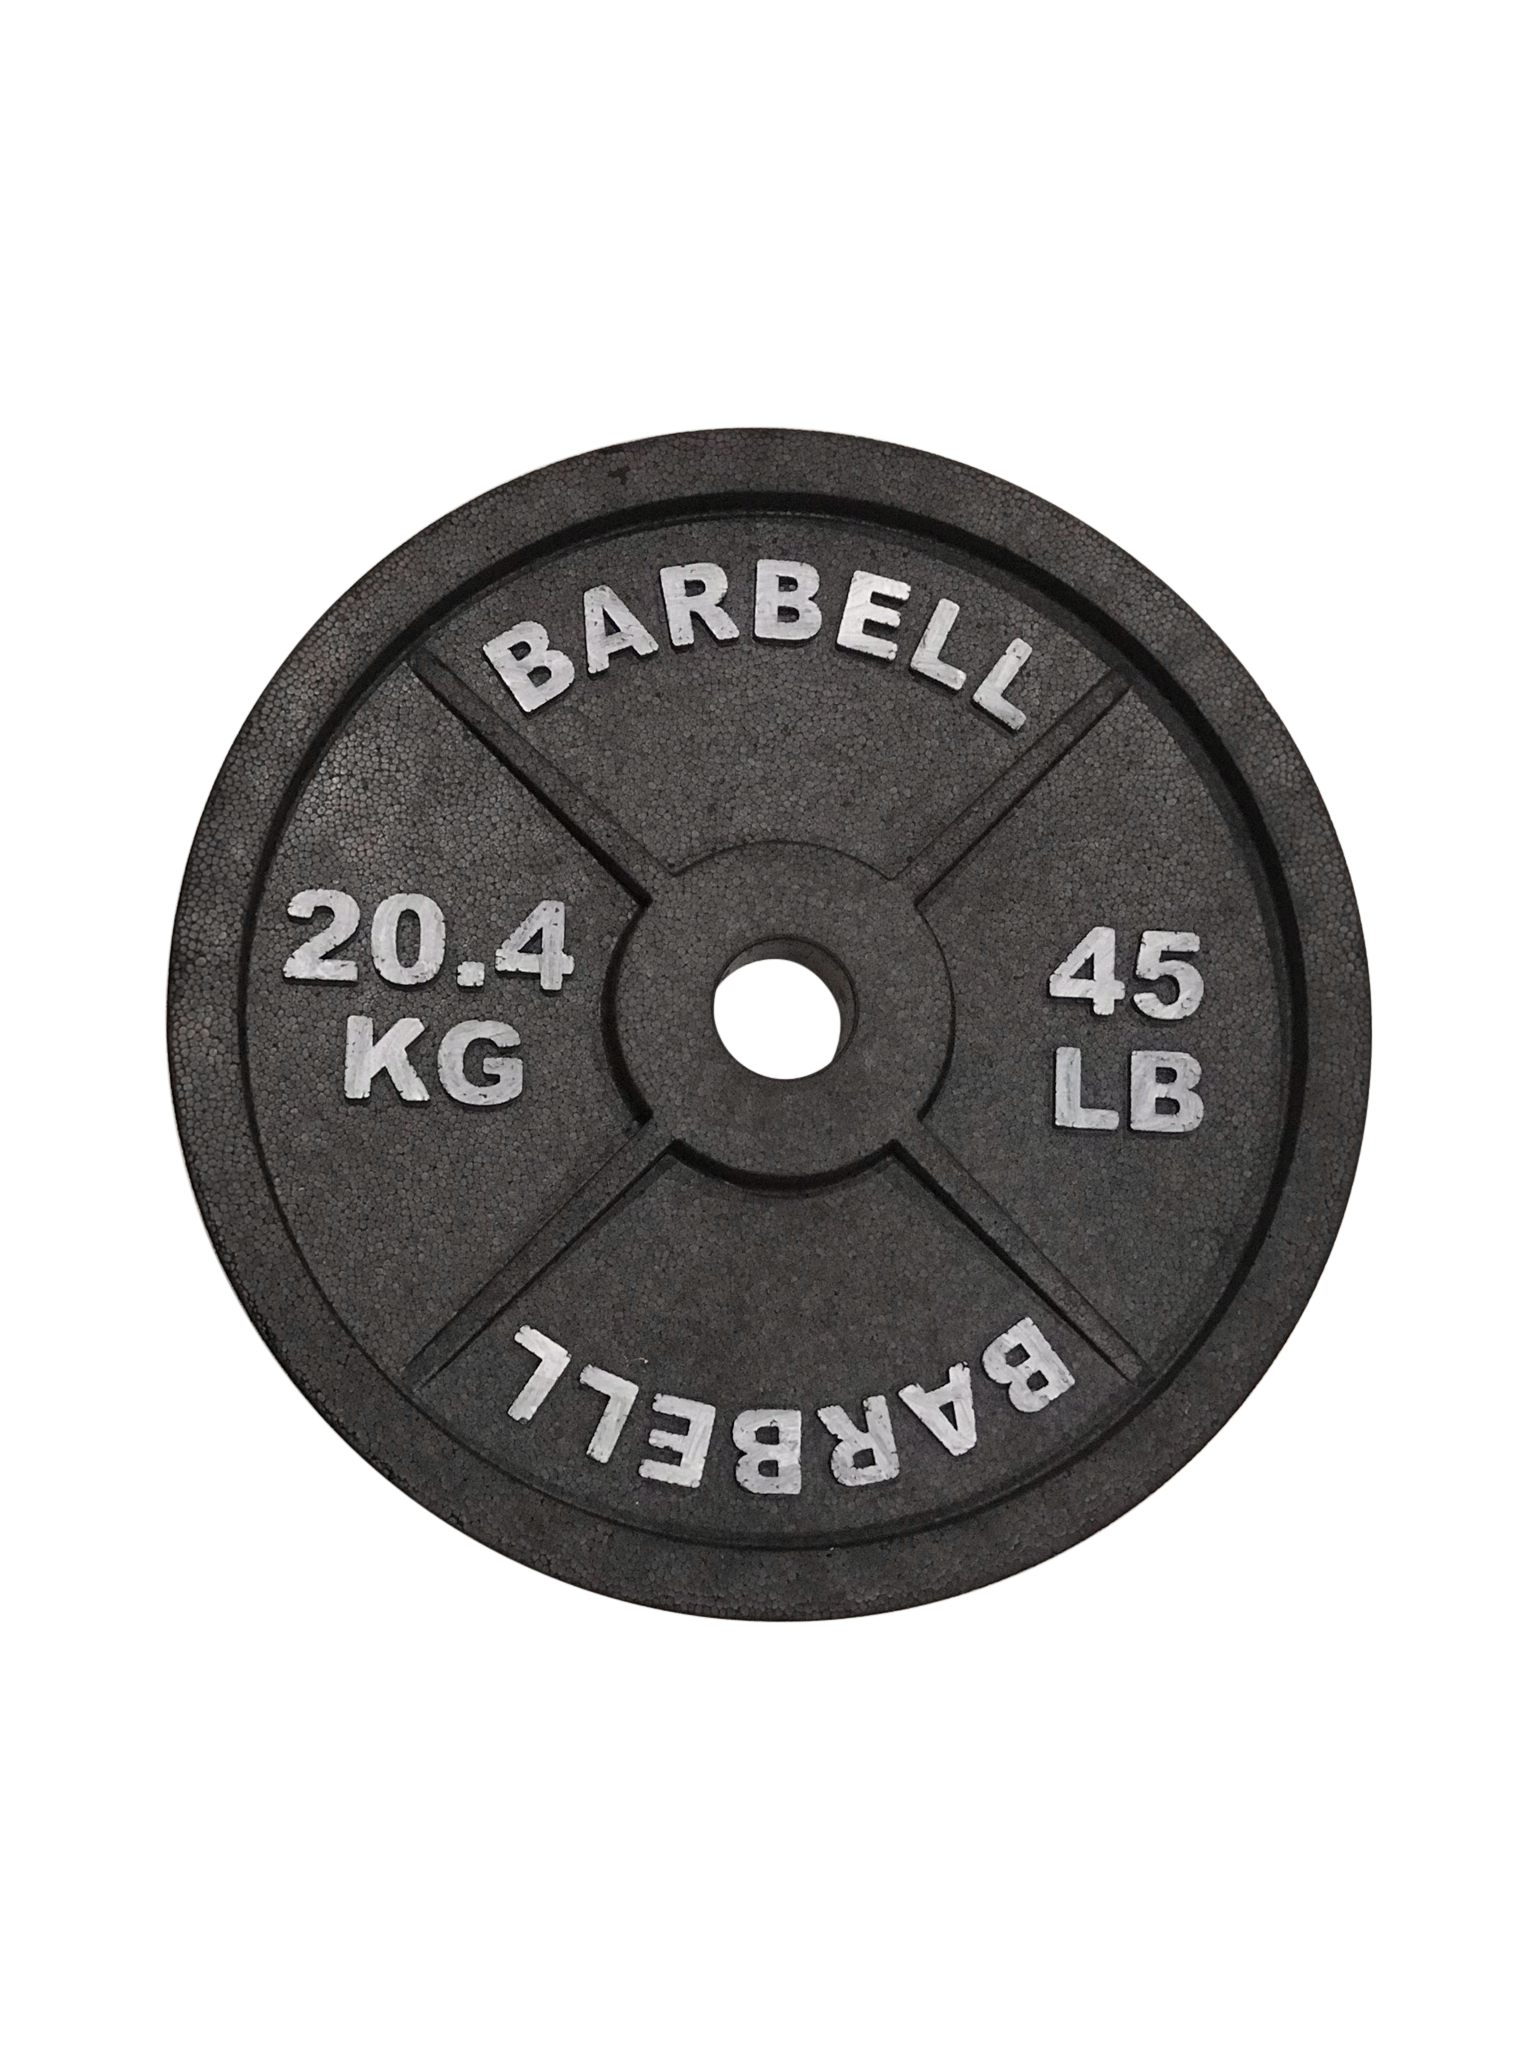 barbell 45 lb